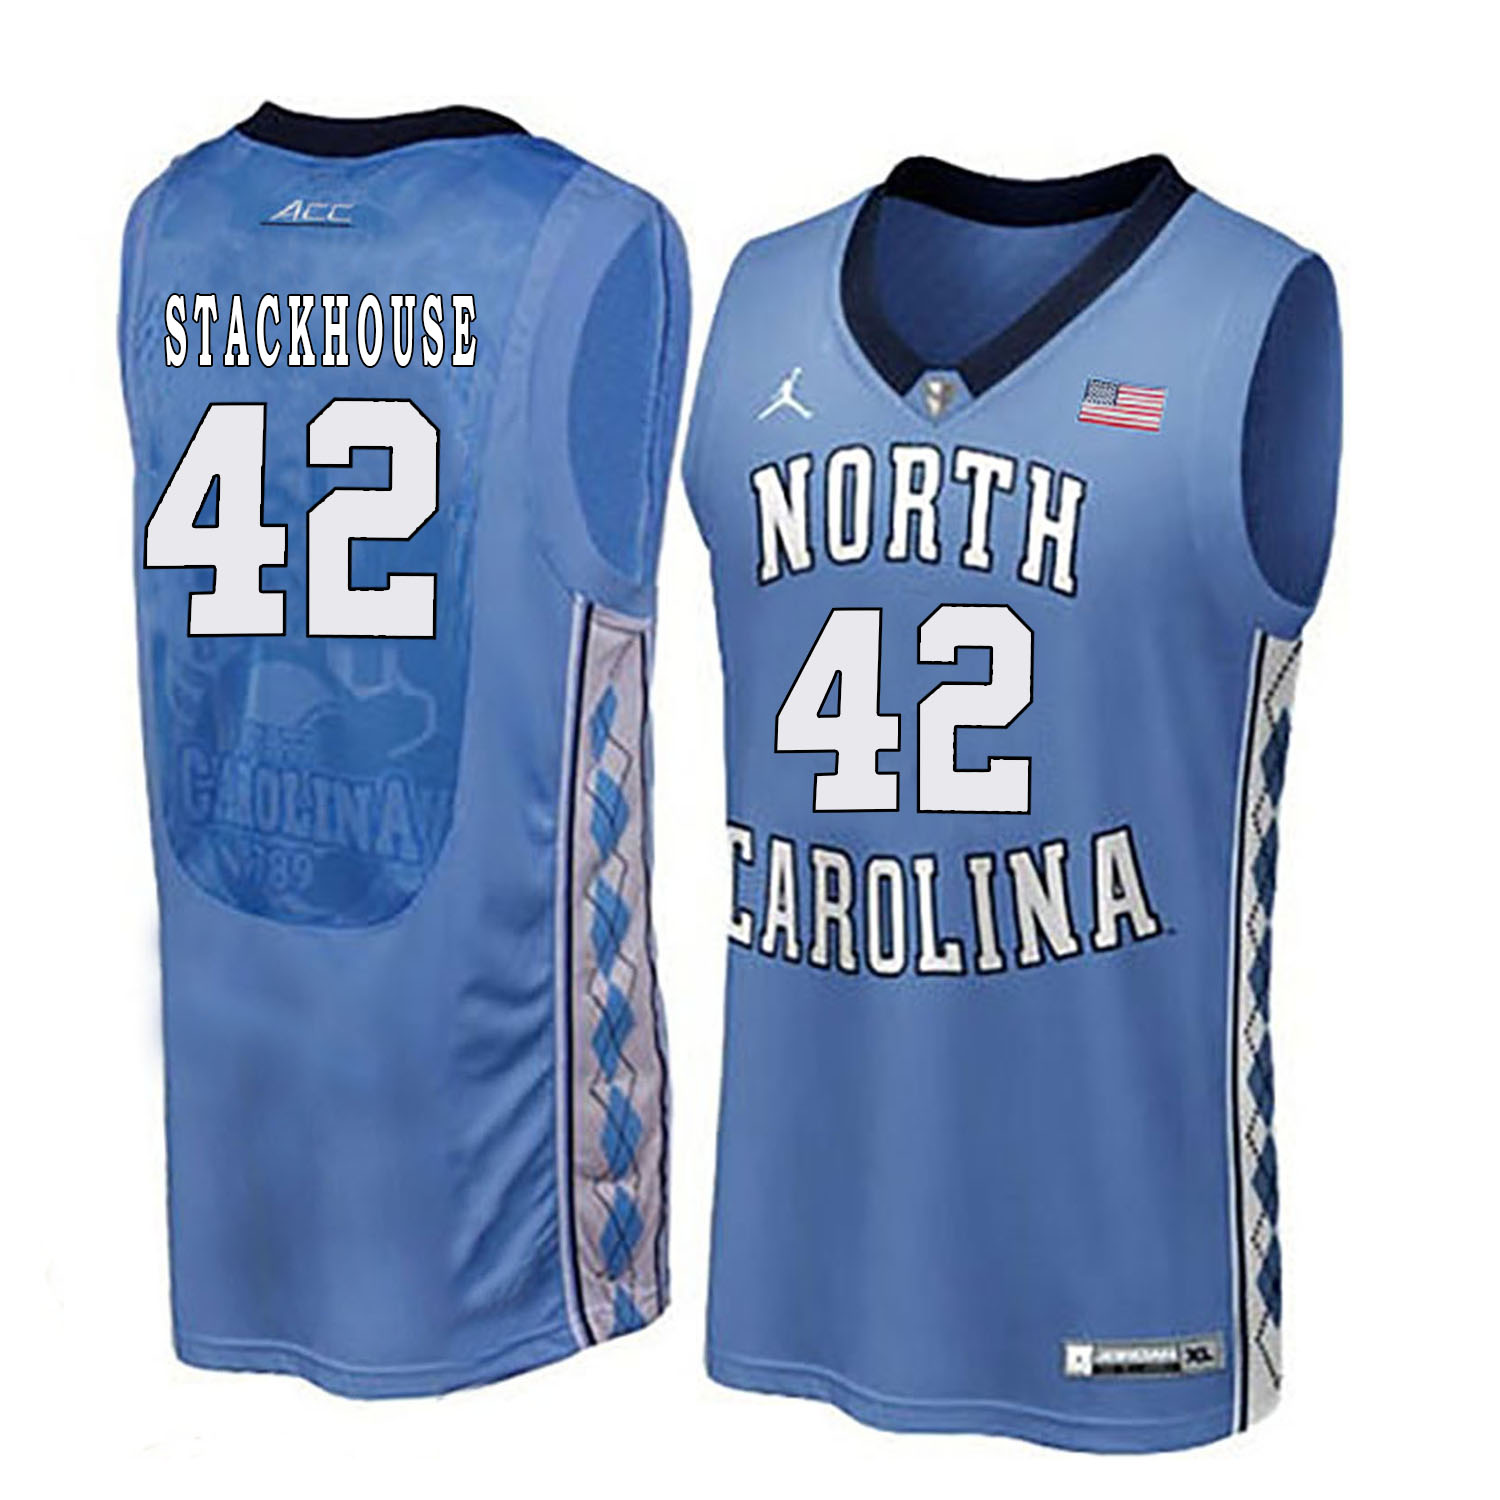 North Carolina Tar Heels 42 Jerry Stackhouse Blue College Basketball Jersey